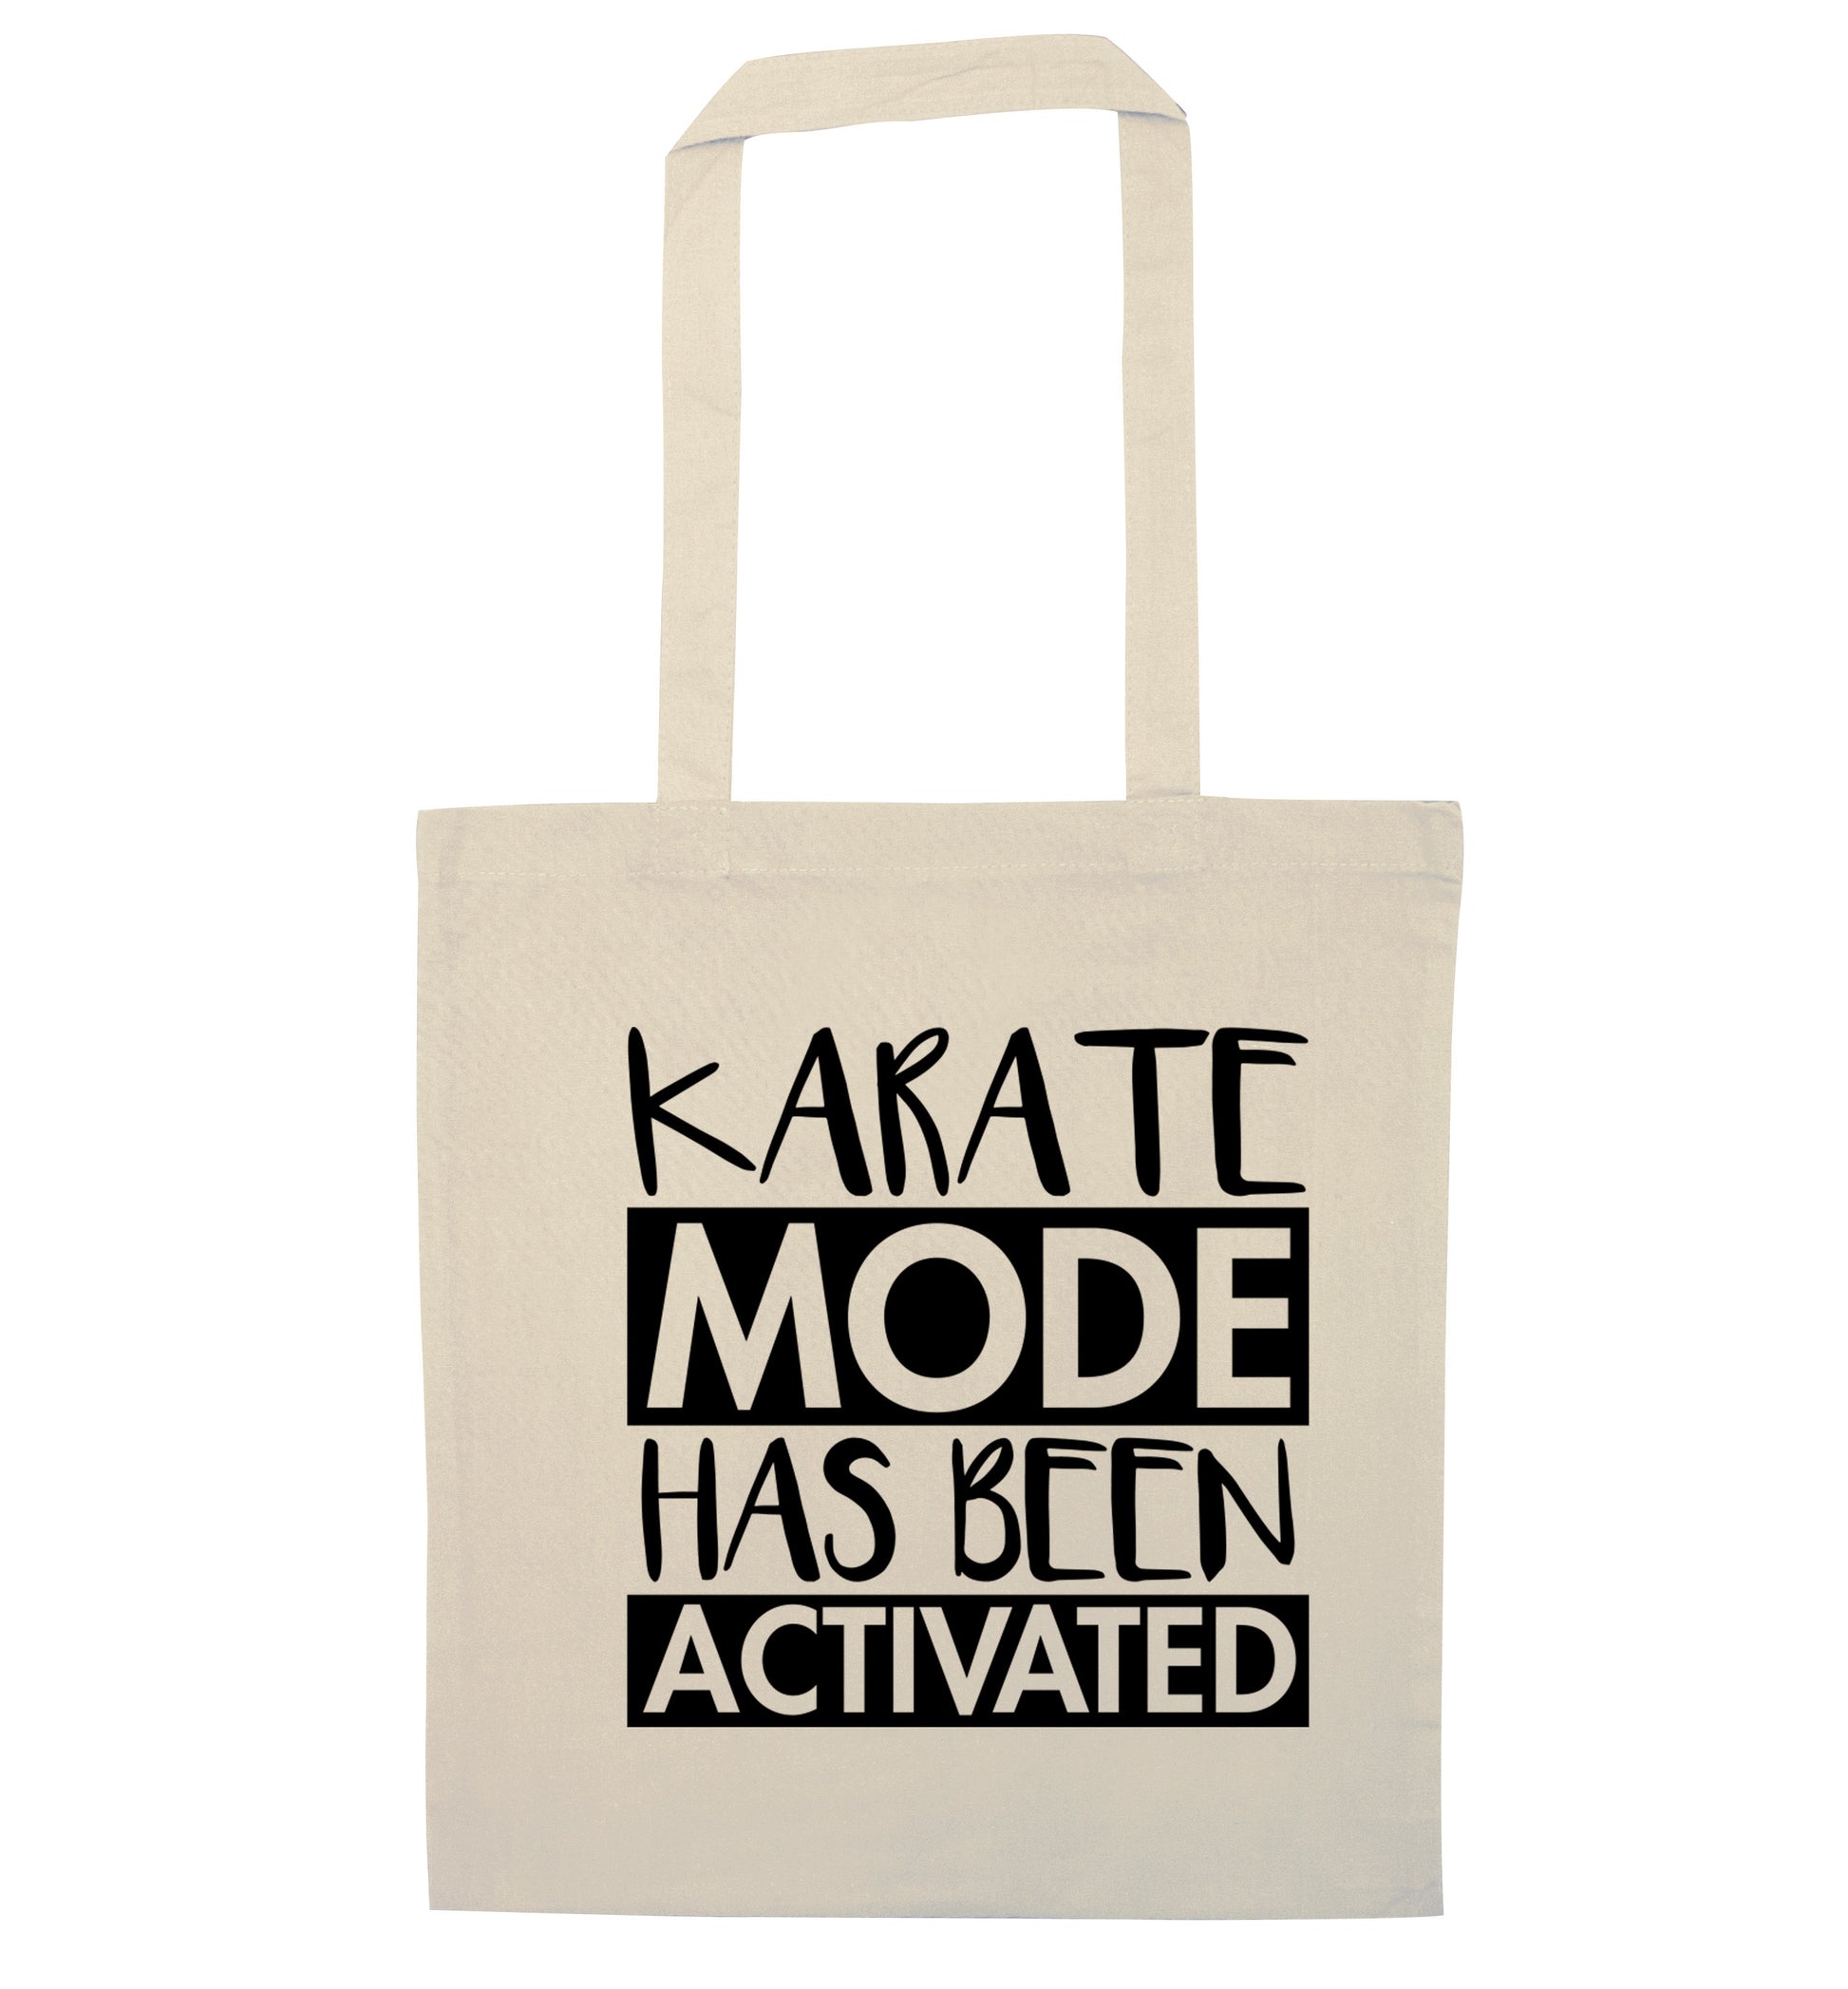 Karate mode activated natural tote bag